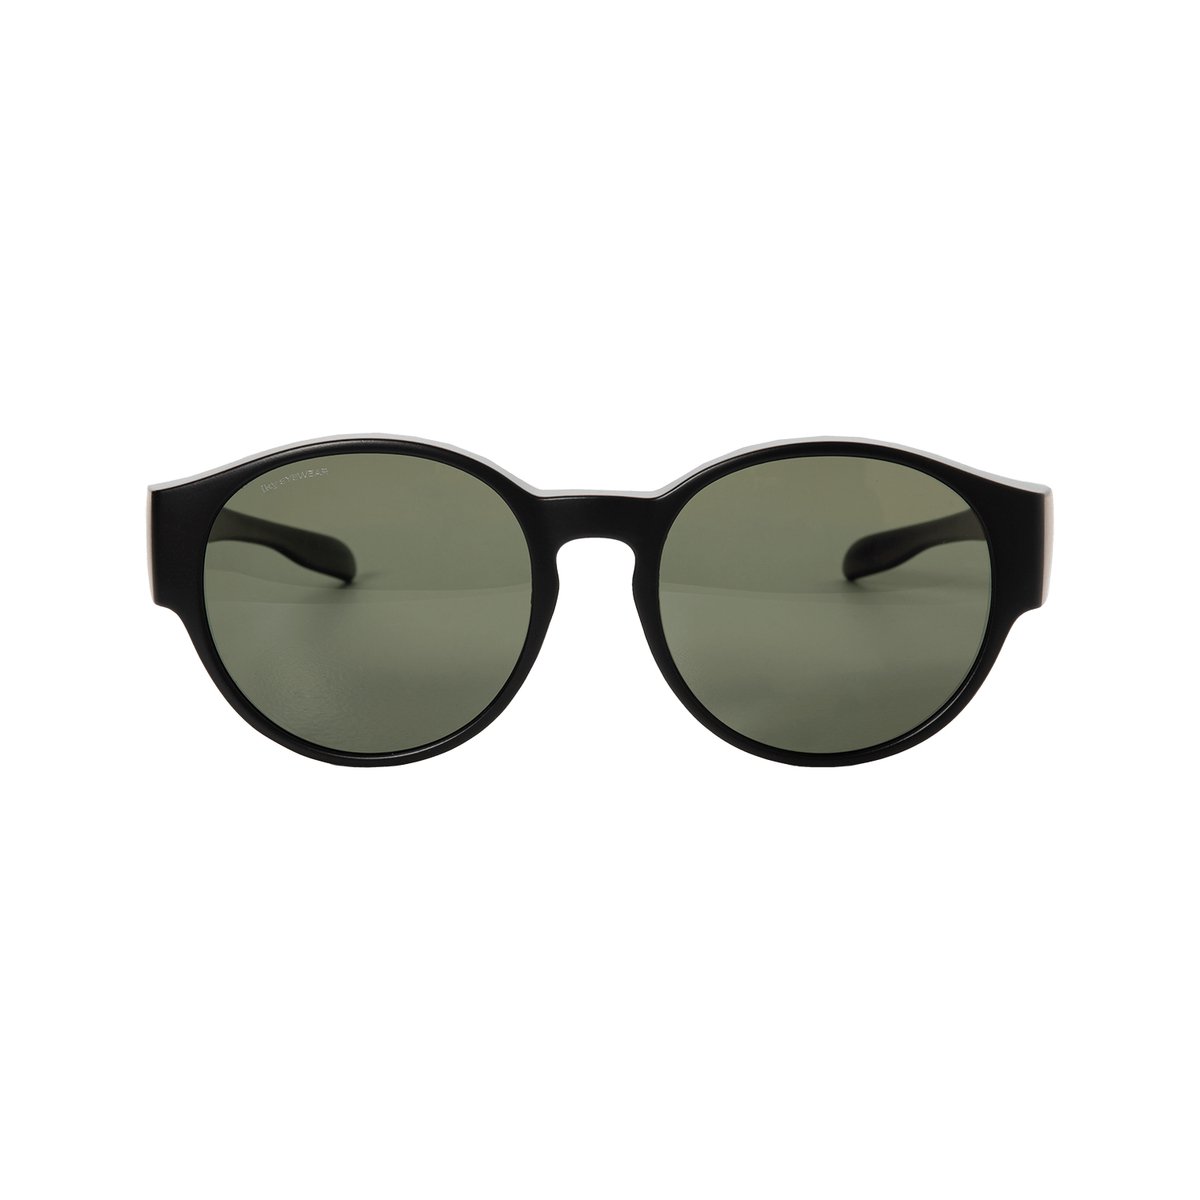 IKY EYEWEAR overzet zonnebril OB-1007A-zwart